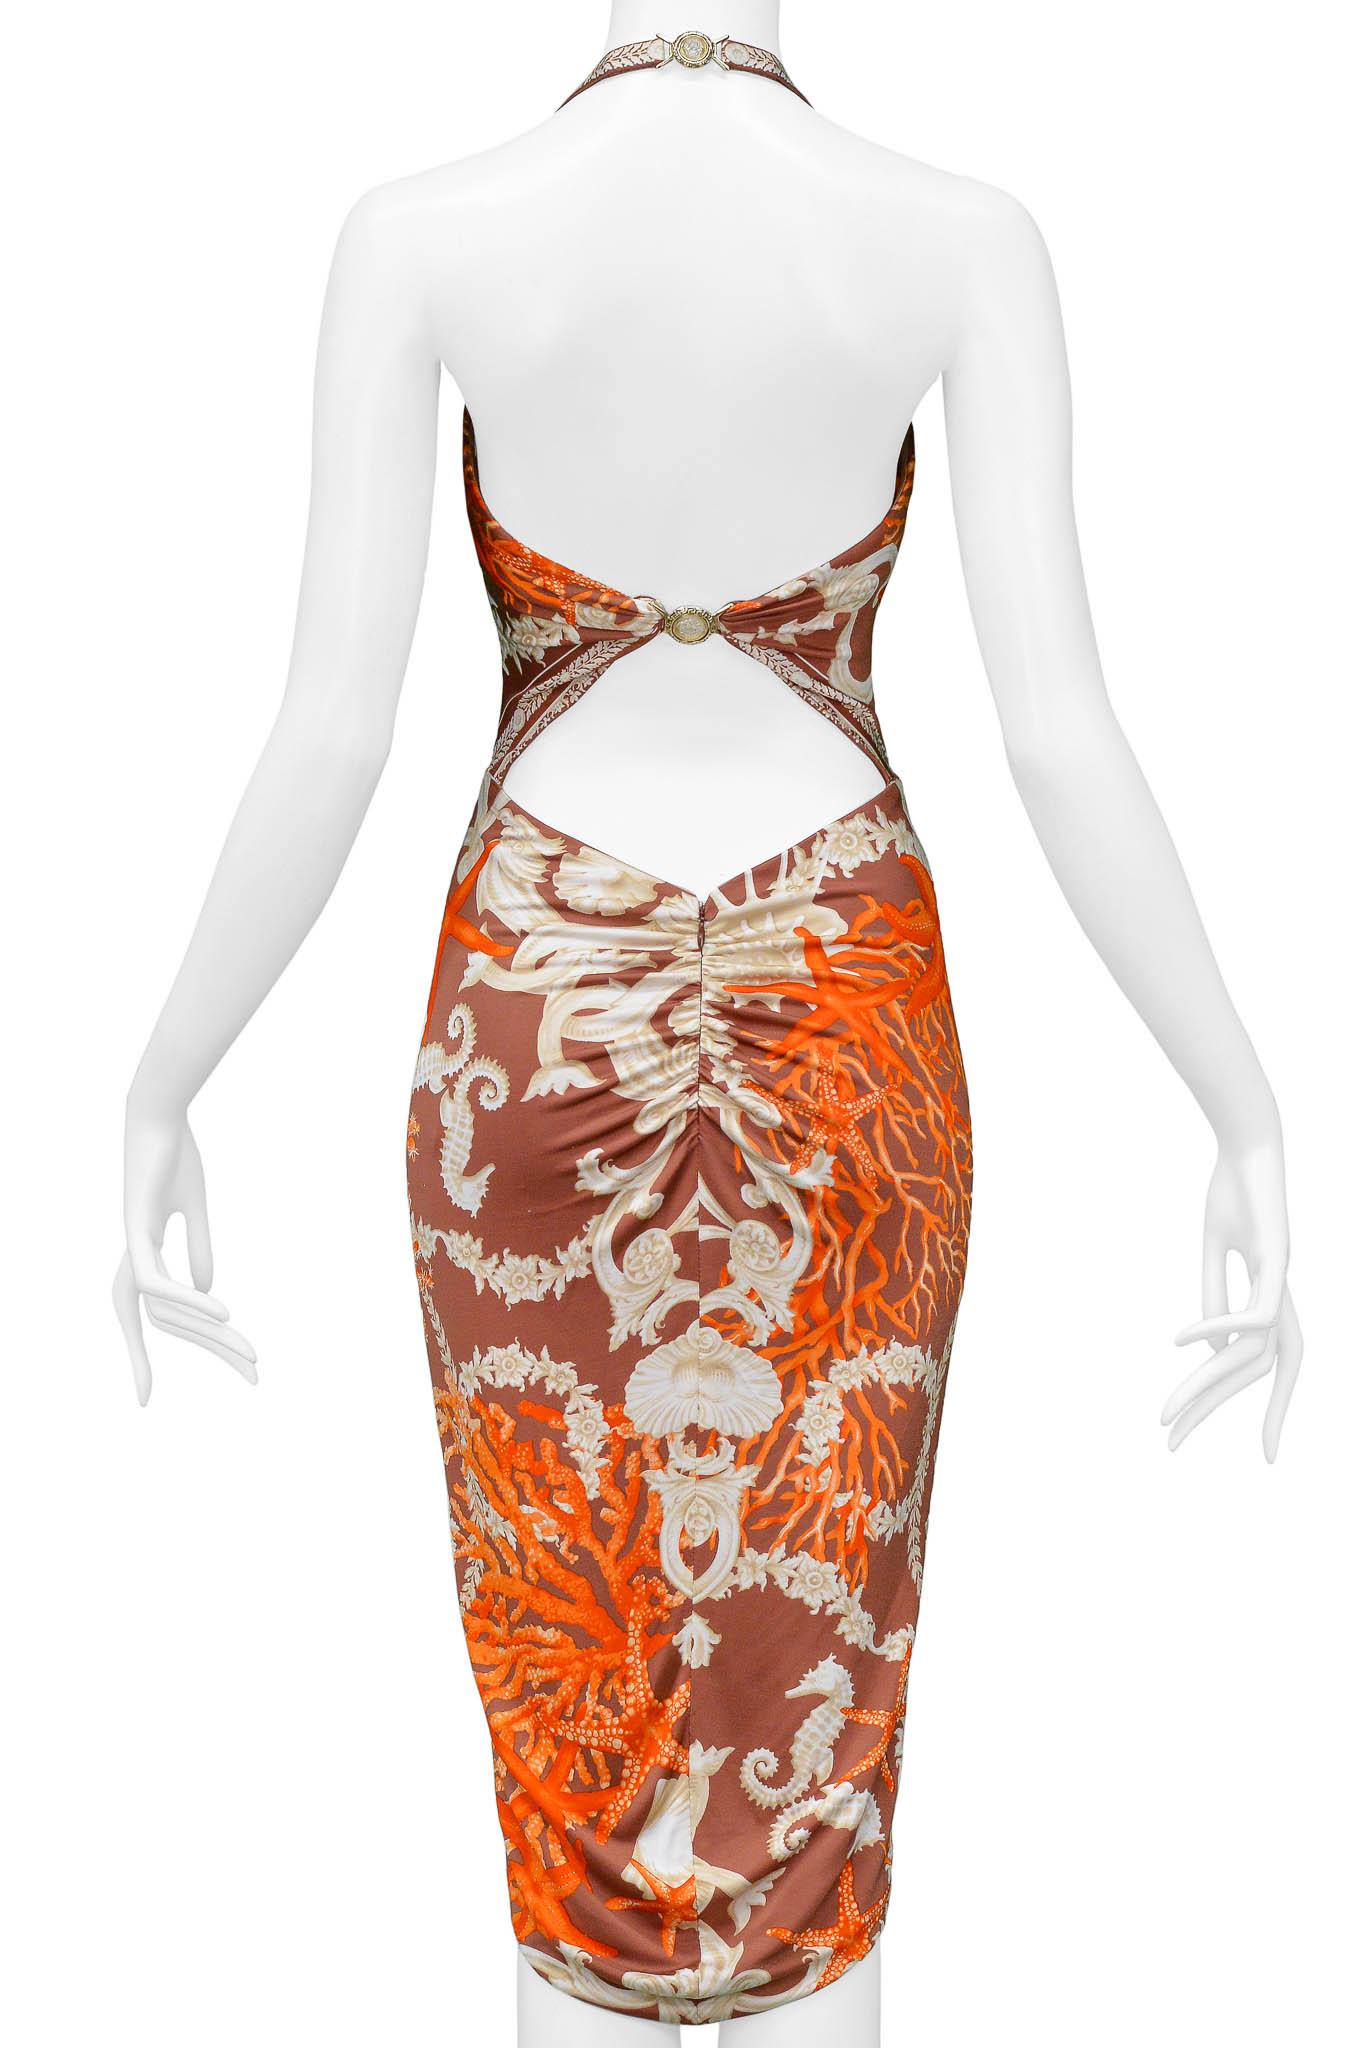 Versace 2005 Seahorse & Coral Print Halter Dress For Sale 2